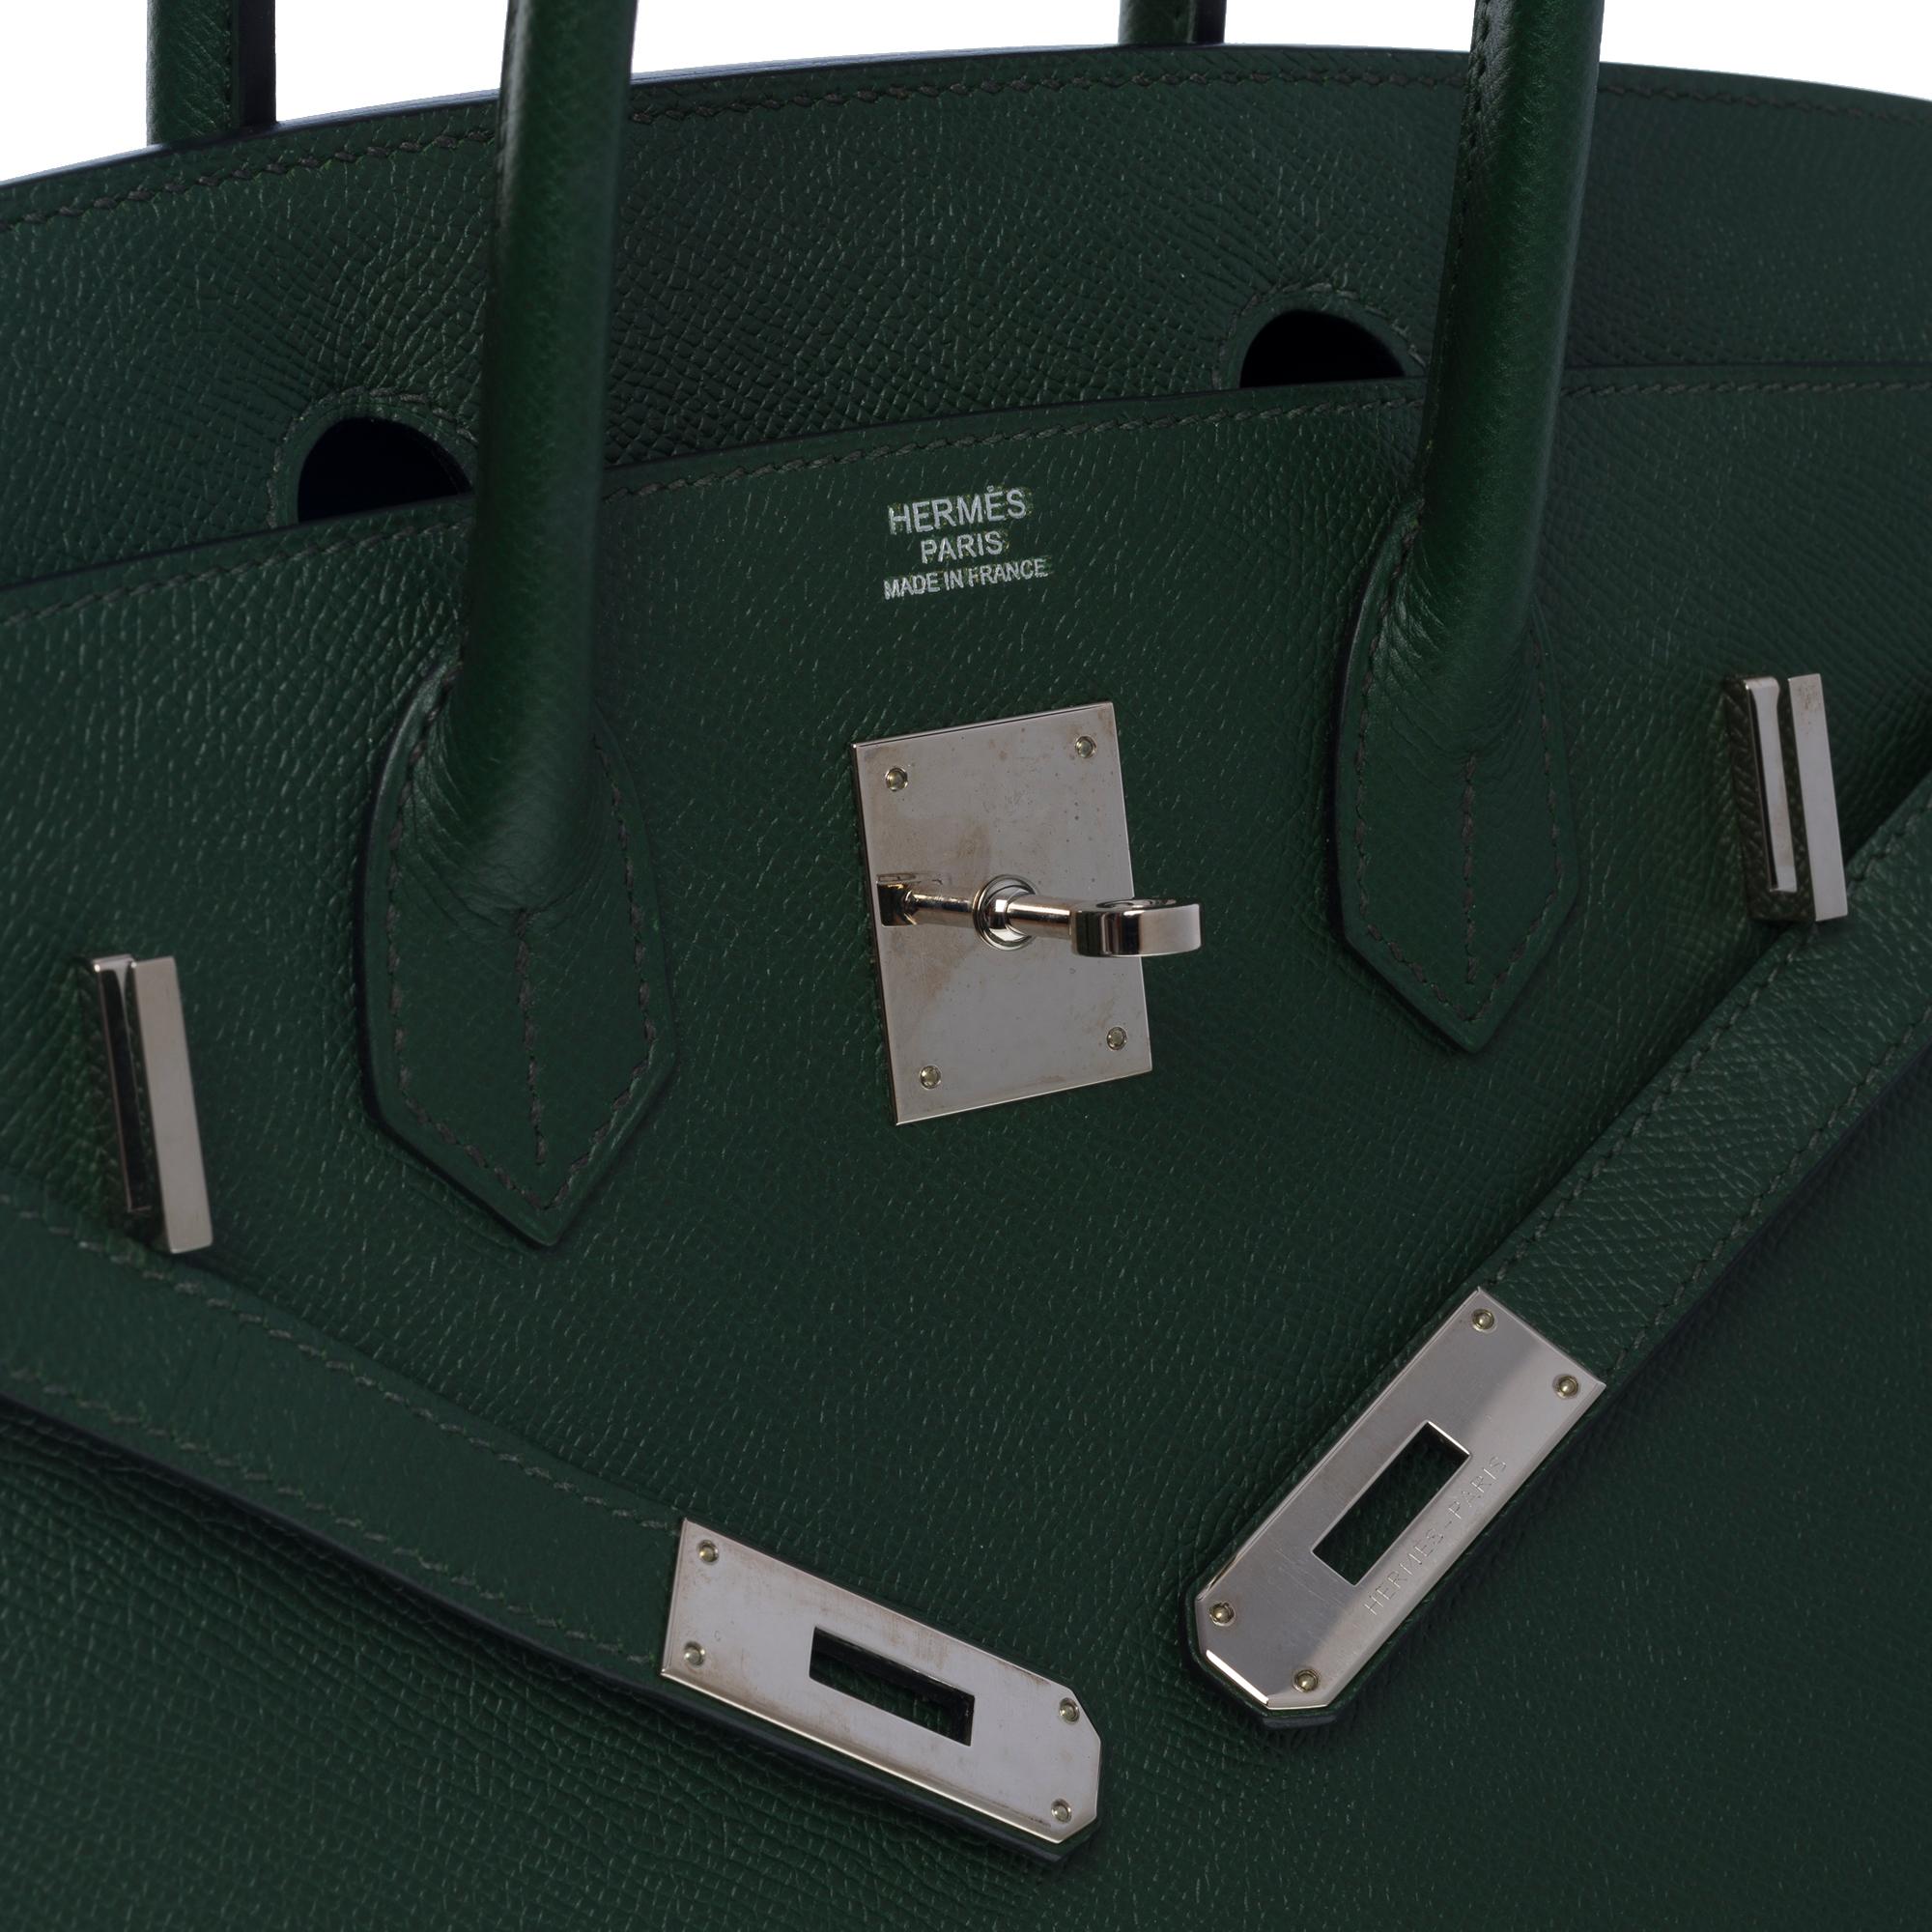 Amazing & Rare Hermès Birkin 30 handbag in Vert Anglais Epsom leather, SHW 1